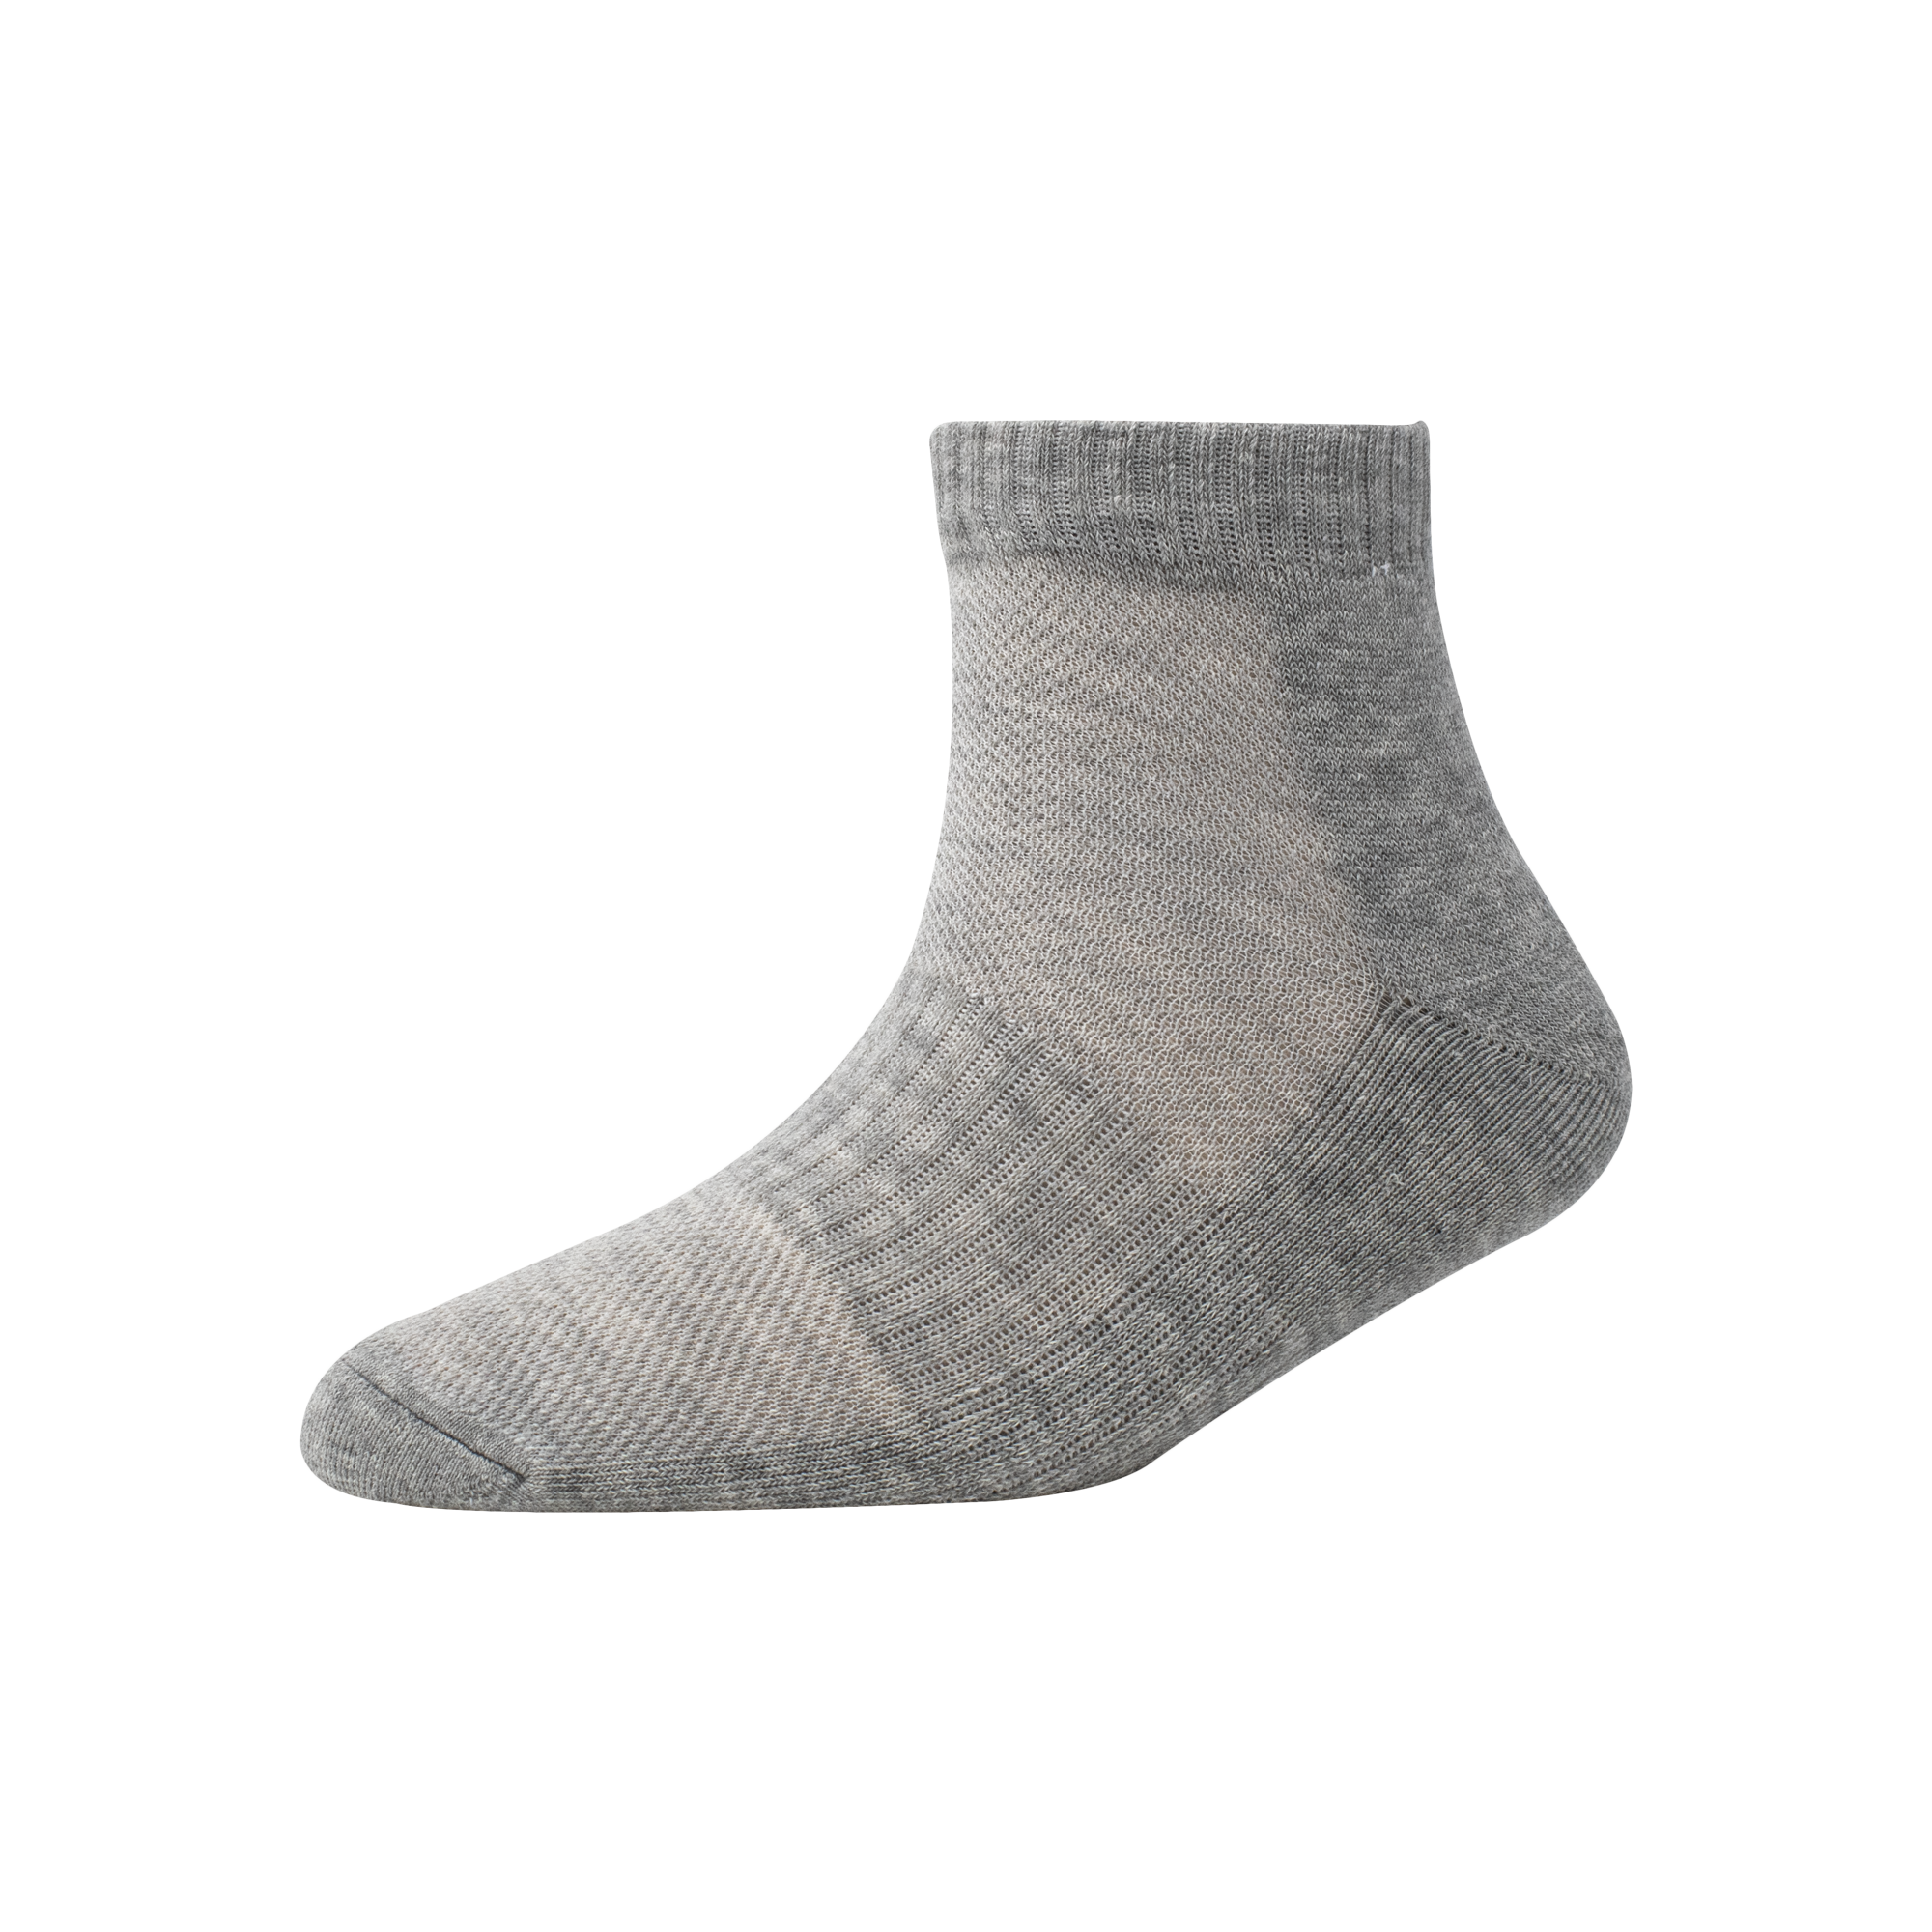 Men's YW-M1-221 Terry Low Cut Mesh Ankle Socks